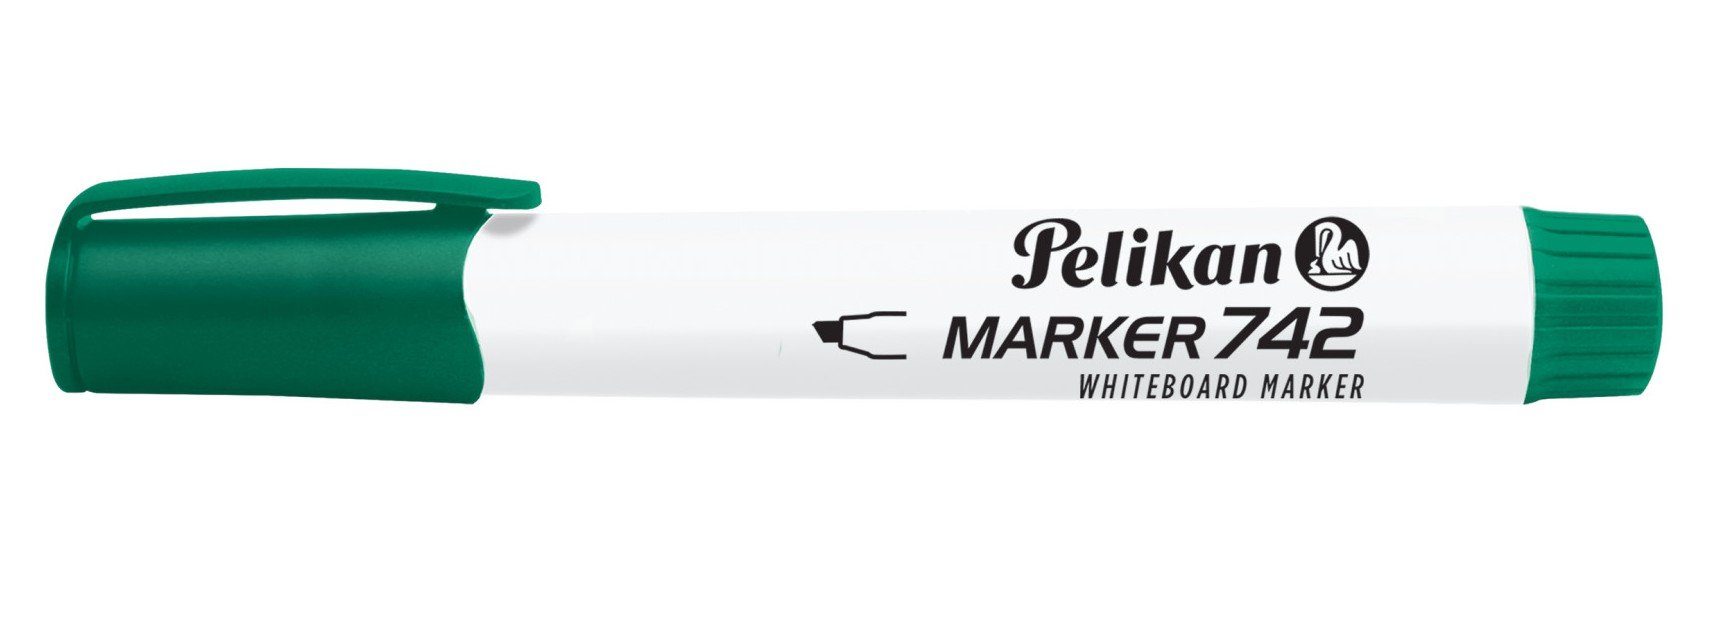 Pelikan Marker Pelikan Whiteboard Marker grün 742